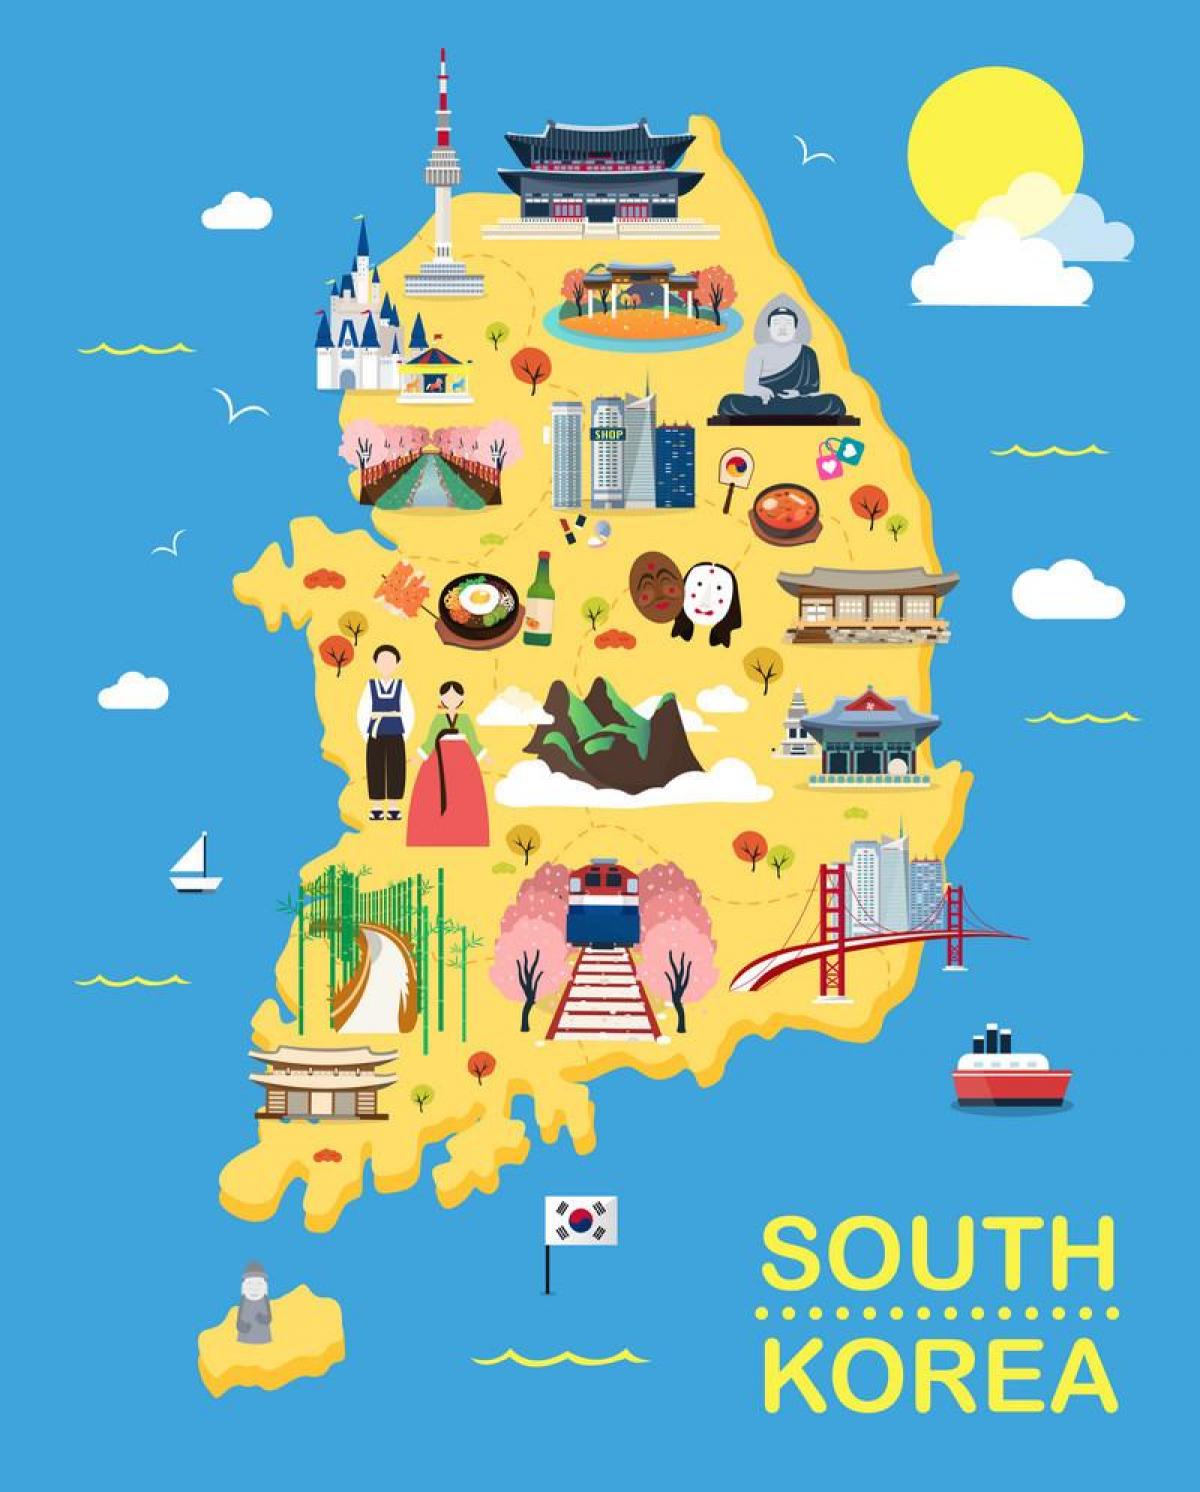 South Korea (ROK) tourist attractions map